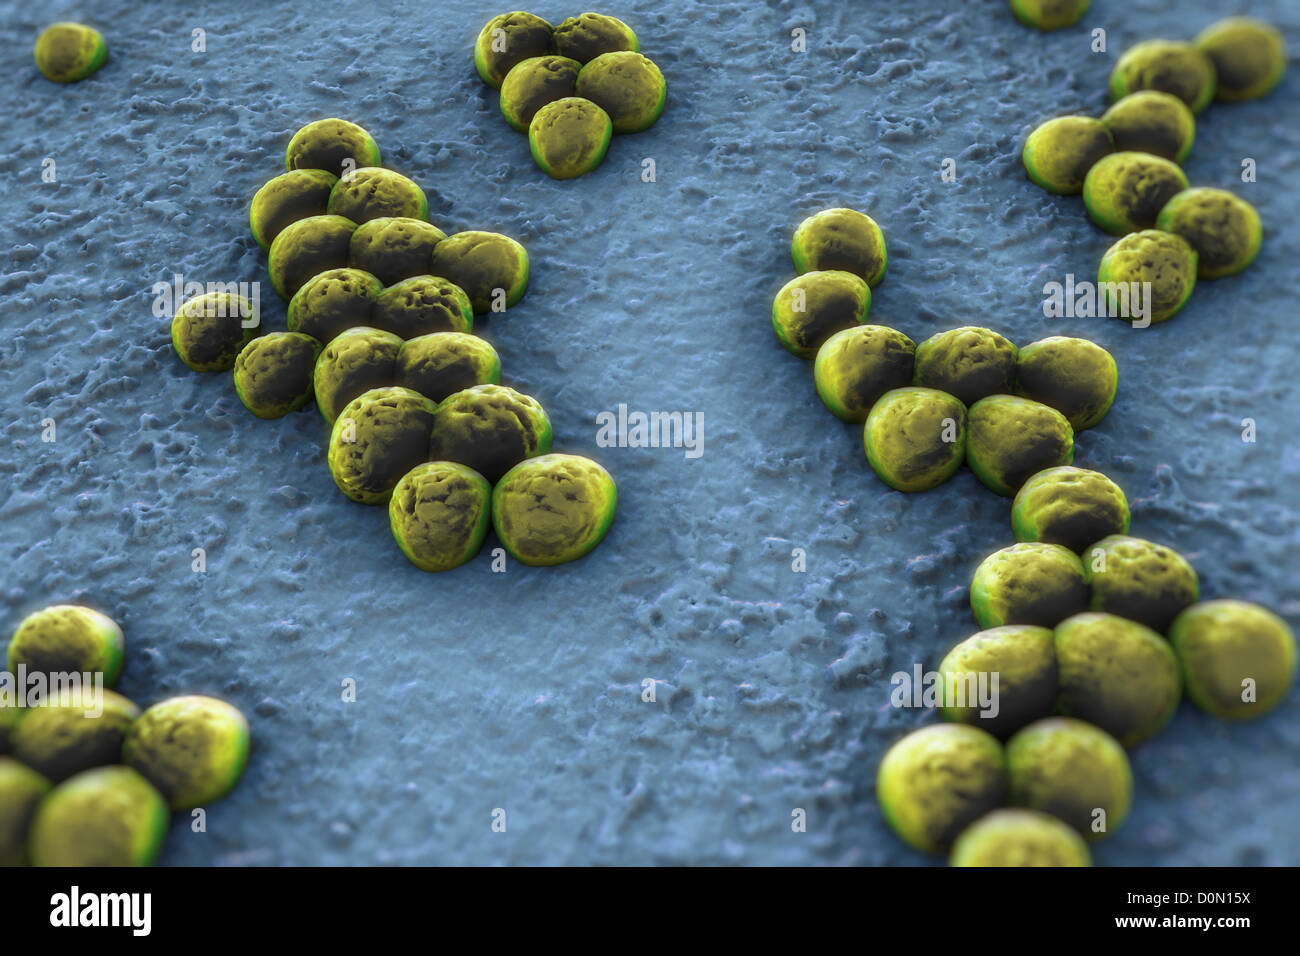 Mrsa bacteria pathogen hi-res stock photography and images - Alamy